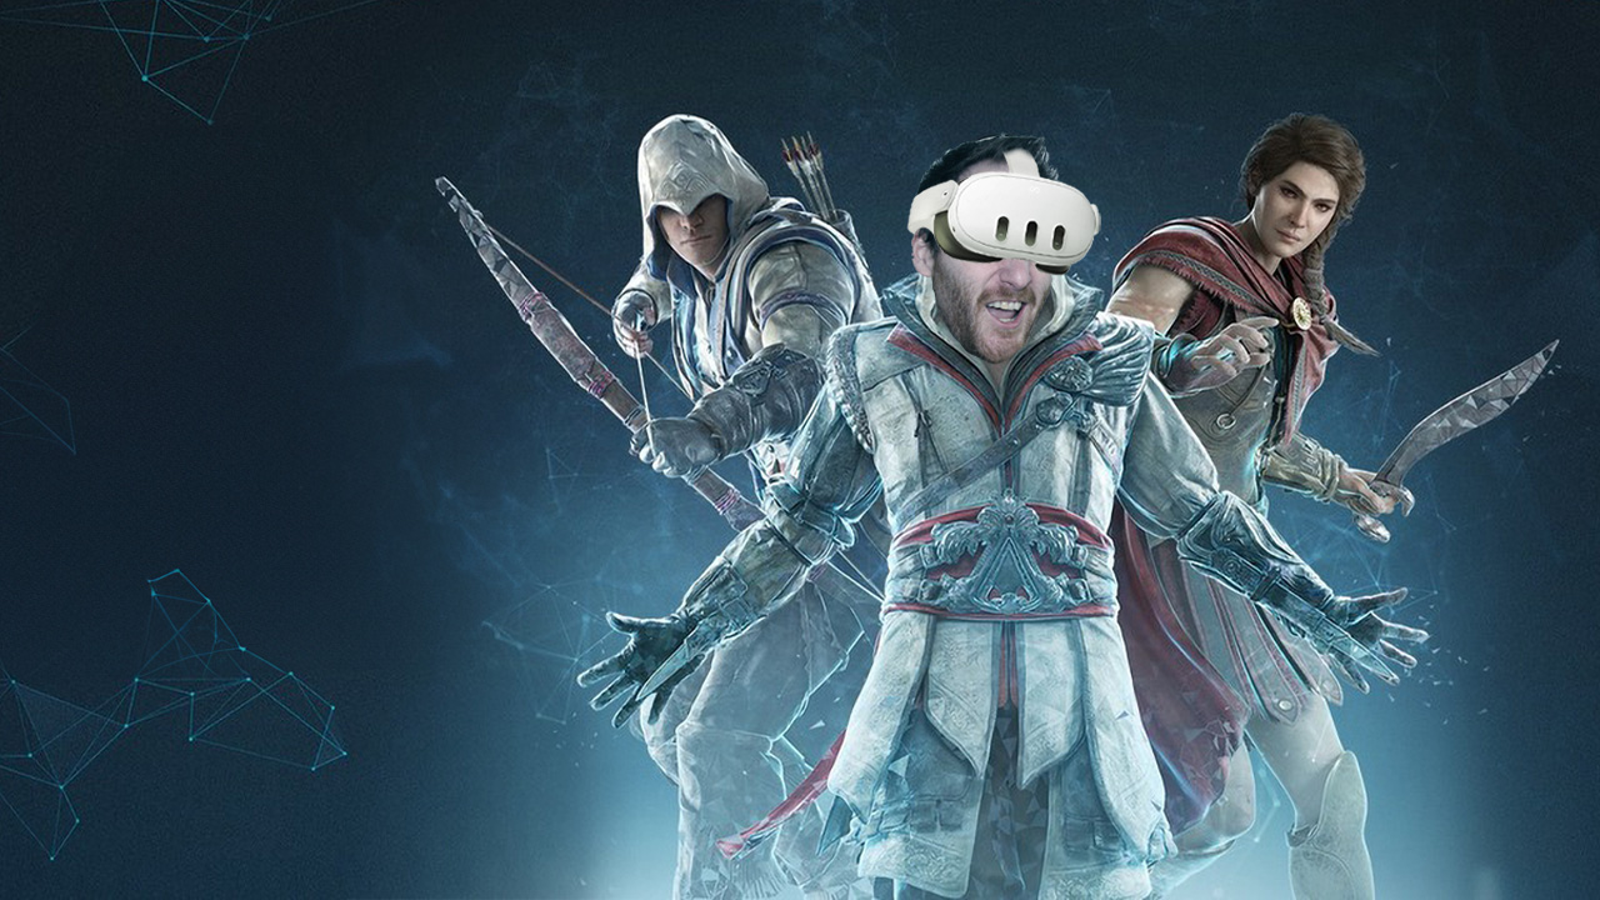 Steam Workshop::Ezio Auditore da Firenze - Assassin's Creed 2 and